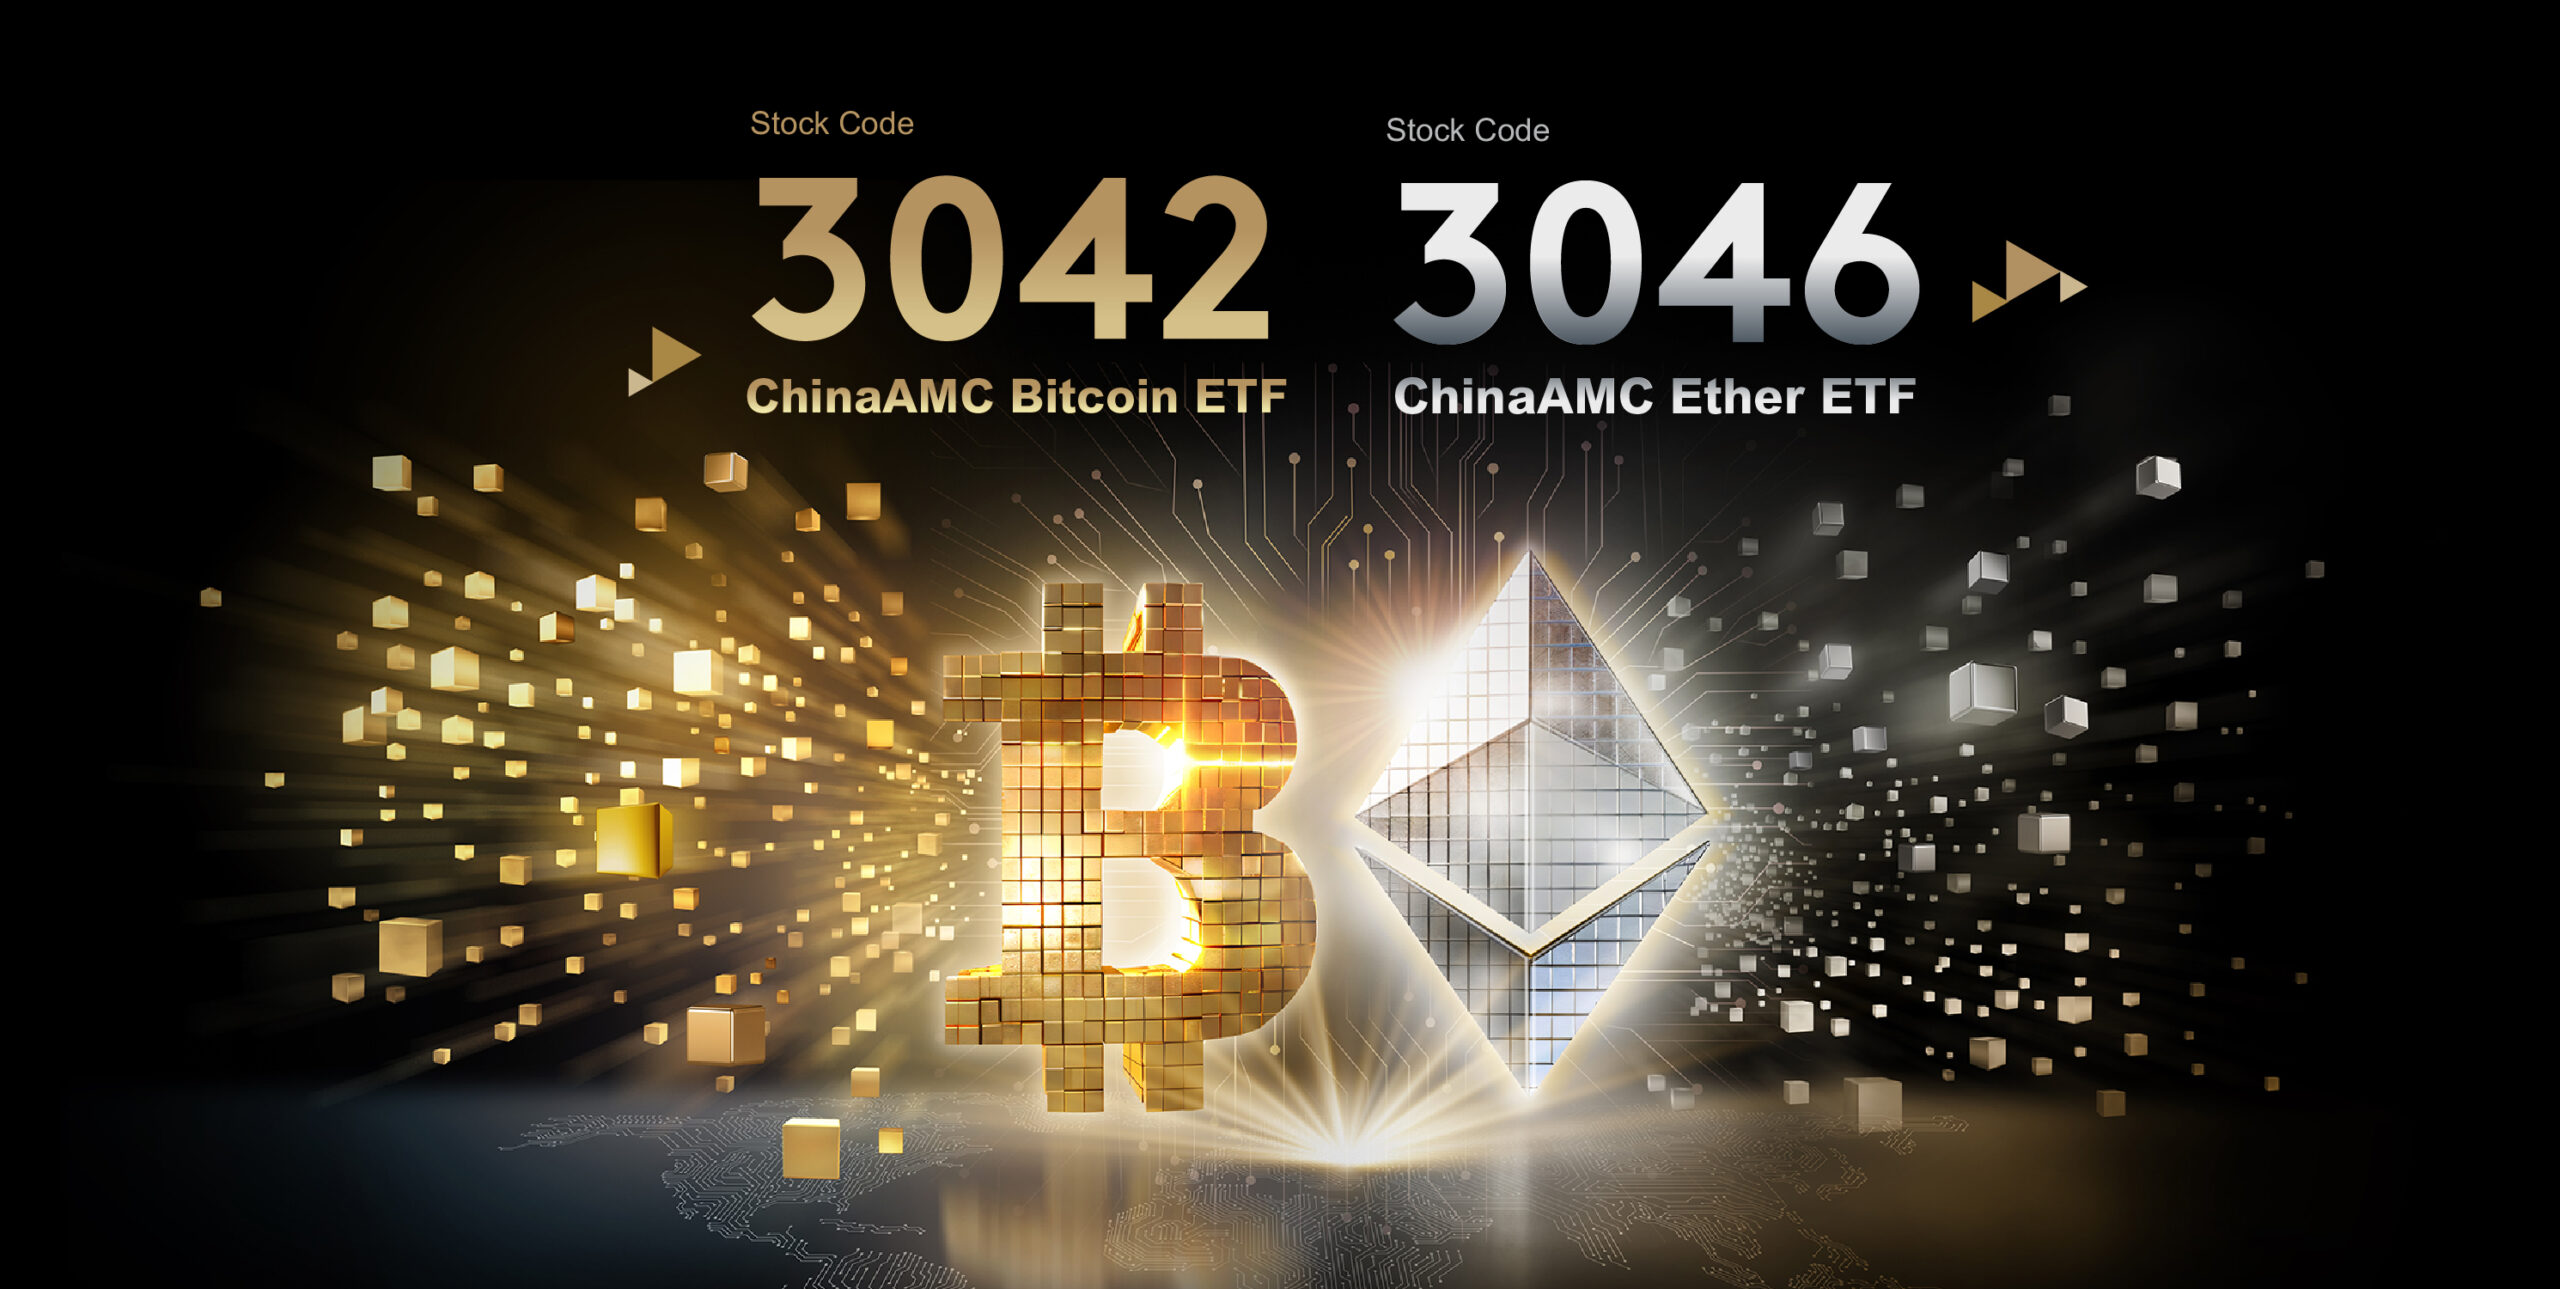 ChinaAMC (HK) Launches ChinaAMC Bitcoin ETF and ChinaAMC Ether ETF